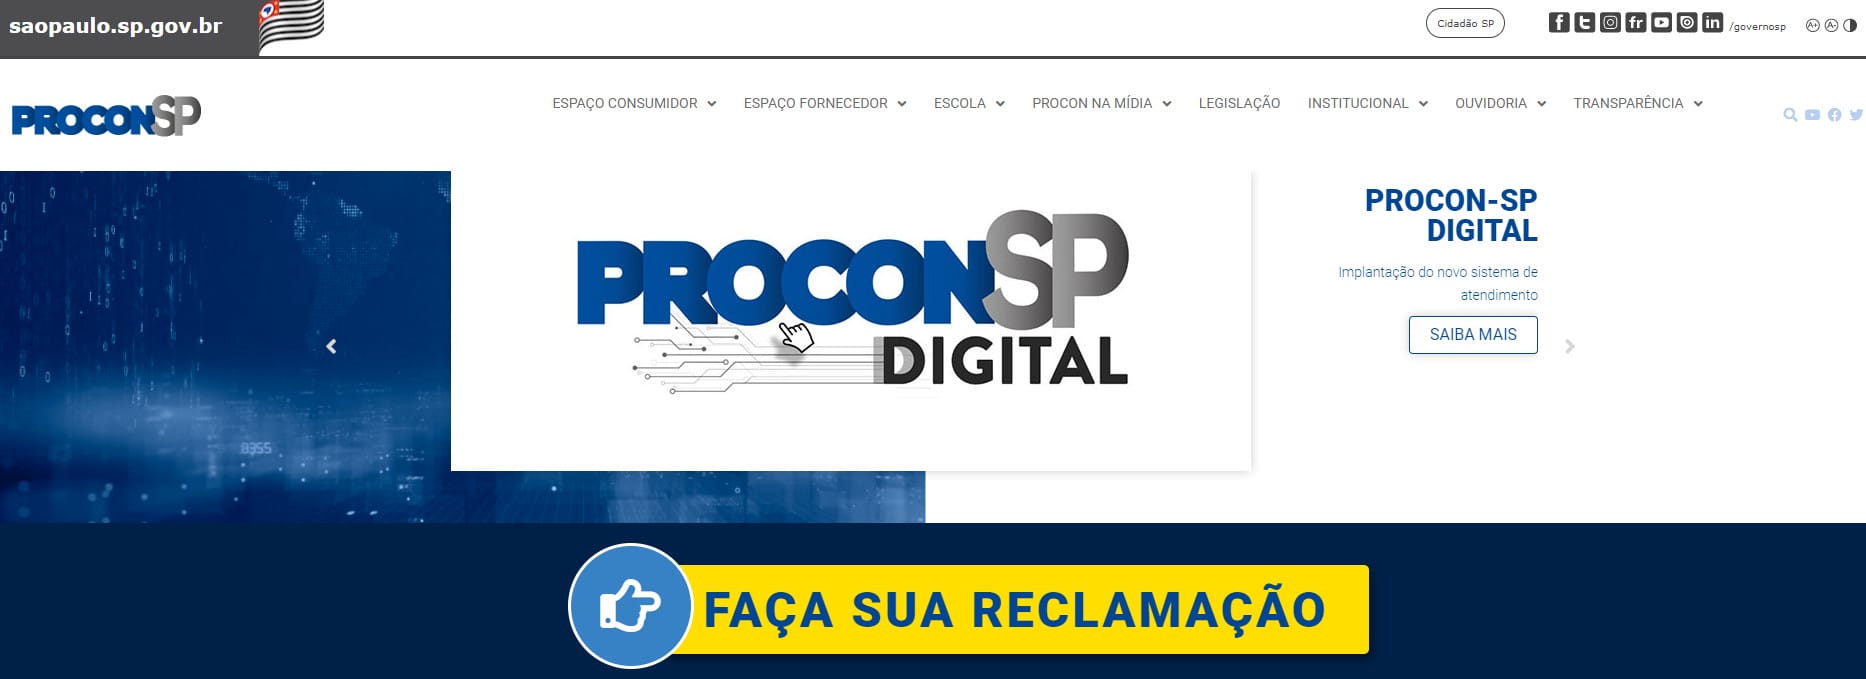 site-procon-sp-para-consulta